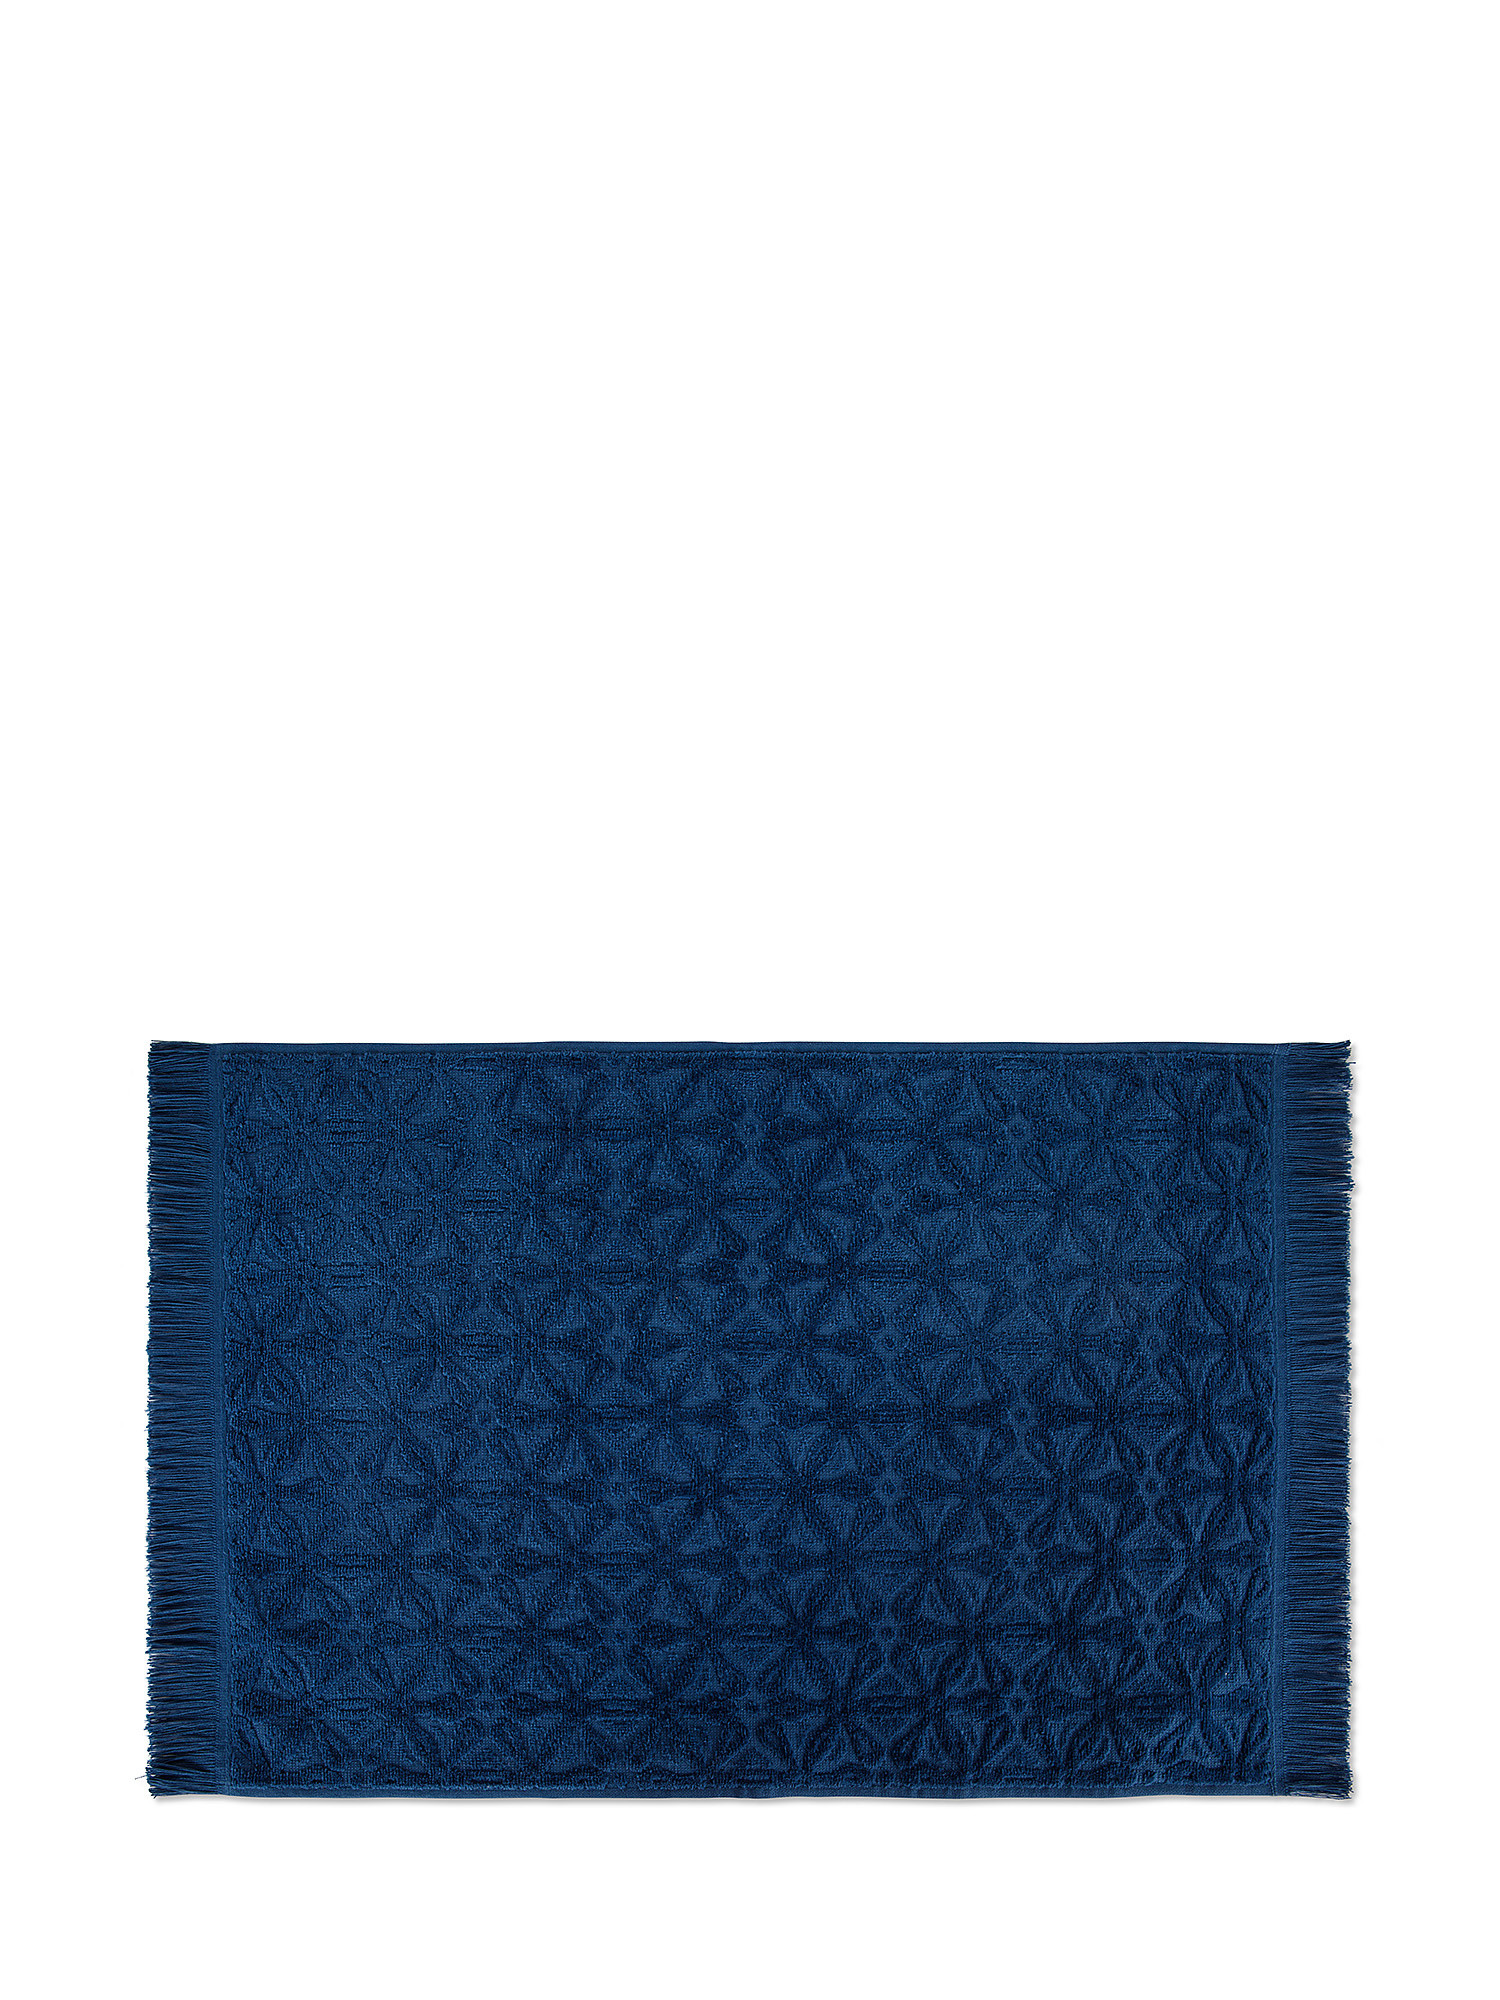 Asciugamano cotone velour motivo geometrico, Blu, large image number 1